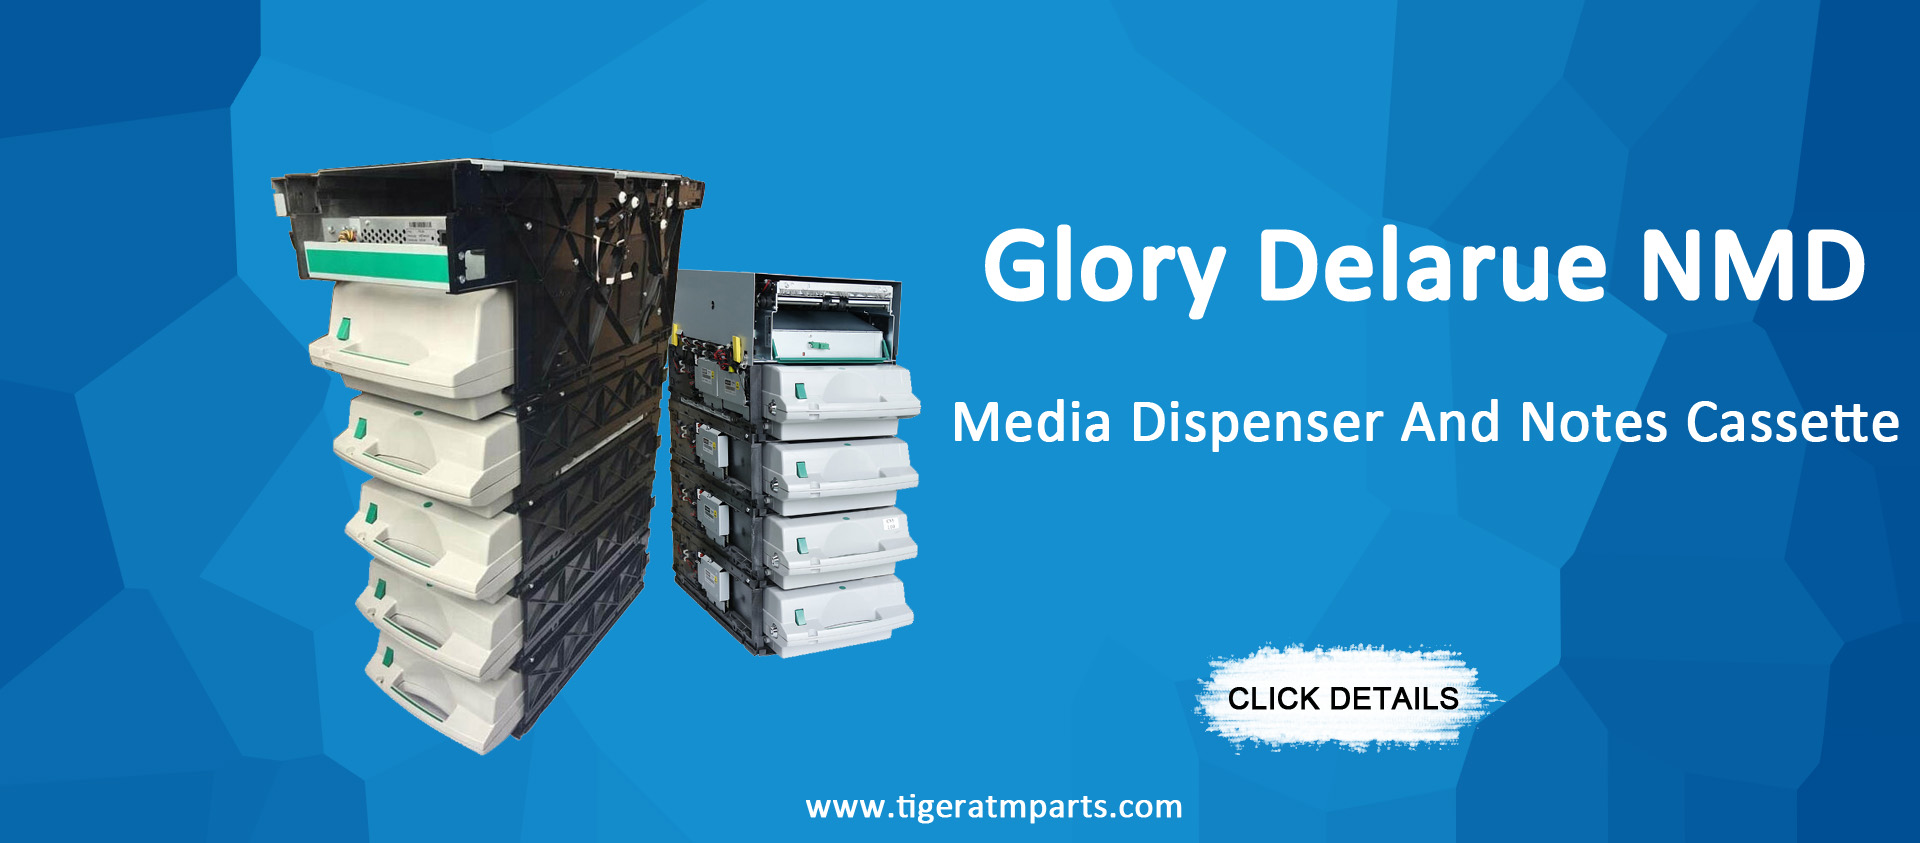 NMD Glory Delarue Media Dispenser And Notes Cassette